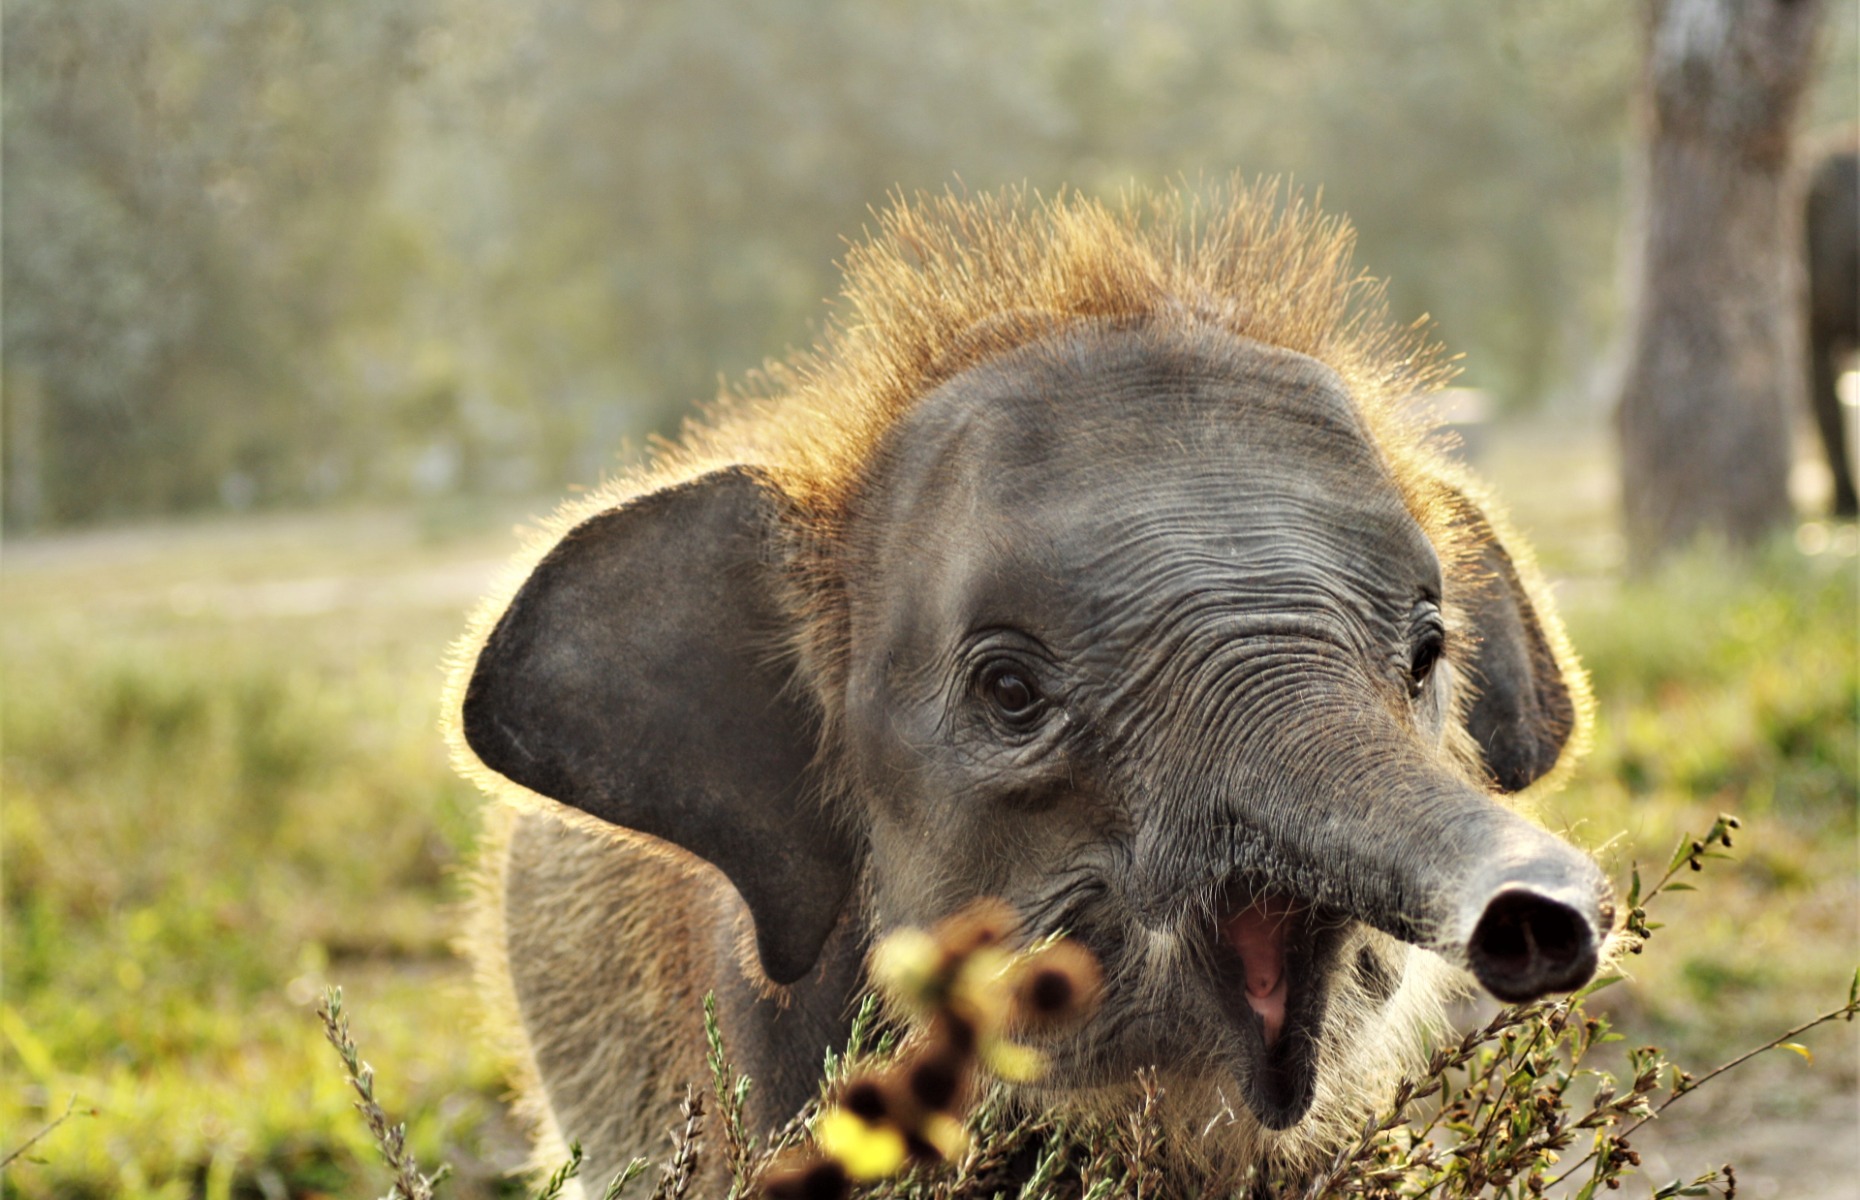 Sumatran elephant baby (Image credit: 3owaldi/Shutterstock)